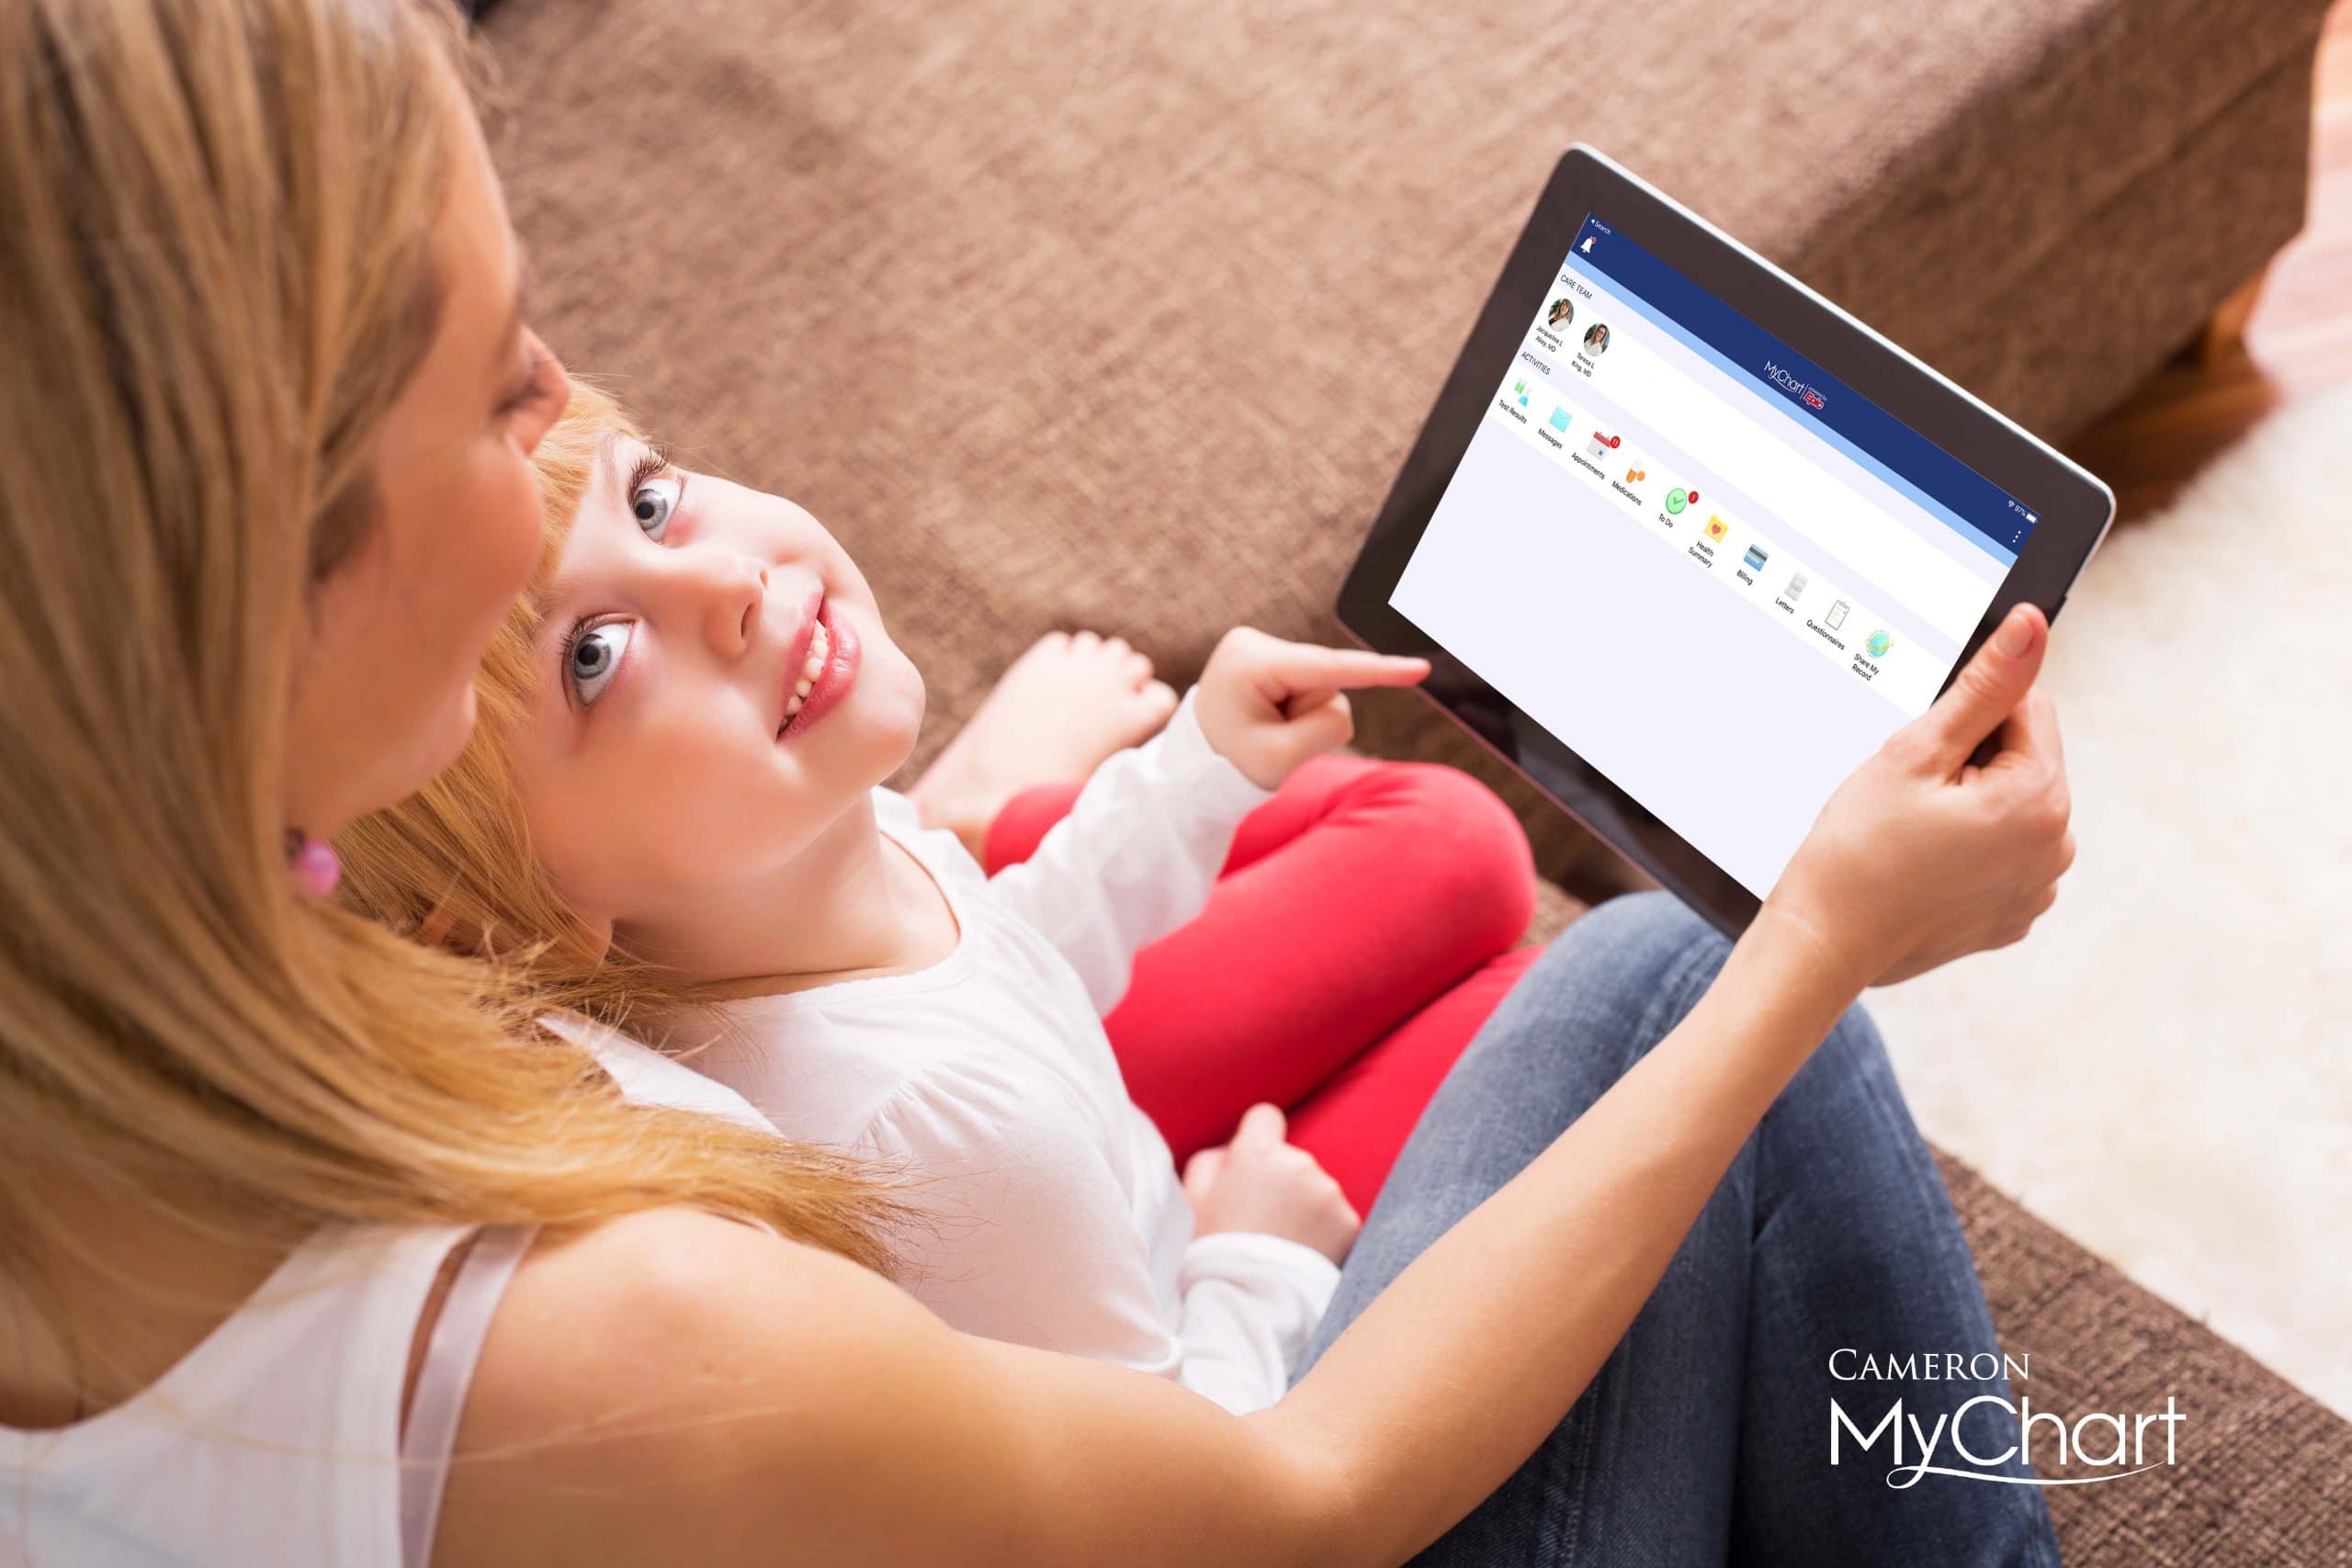 A family uses Cameron's MyChart service on a tablet